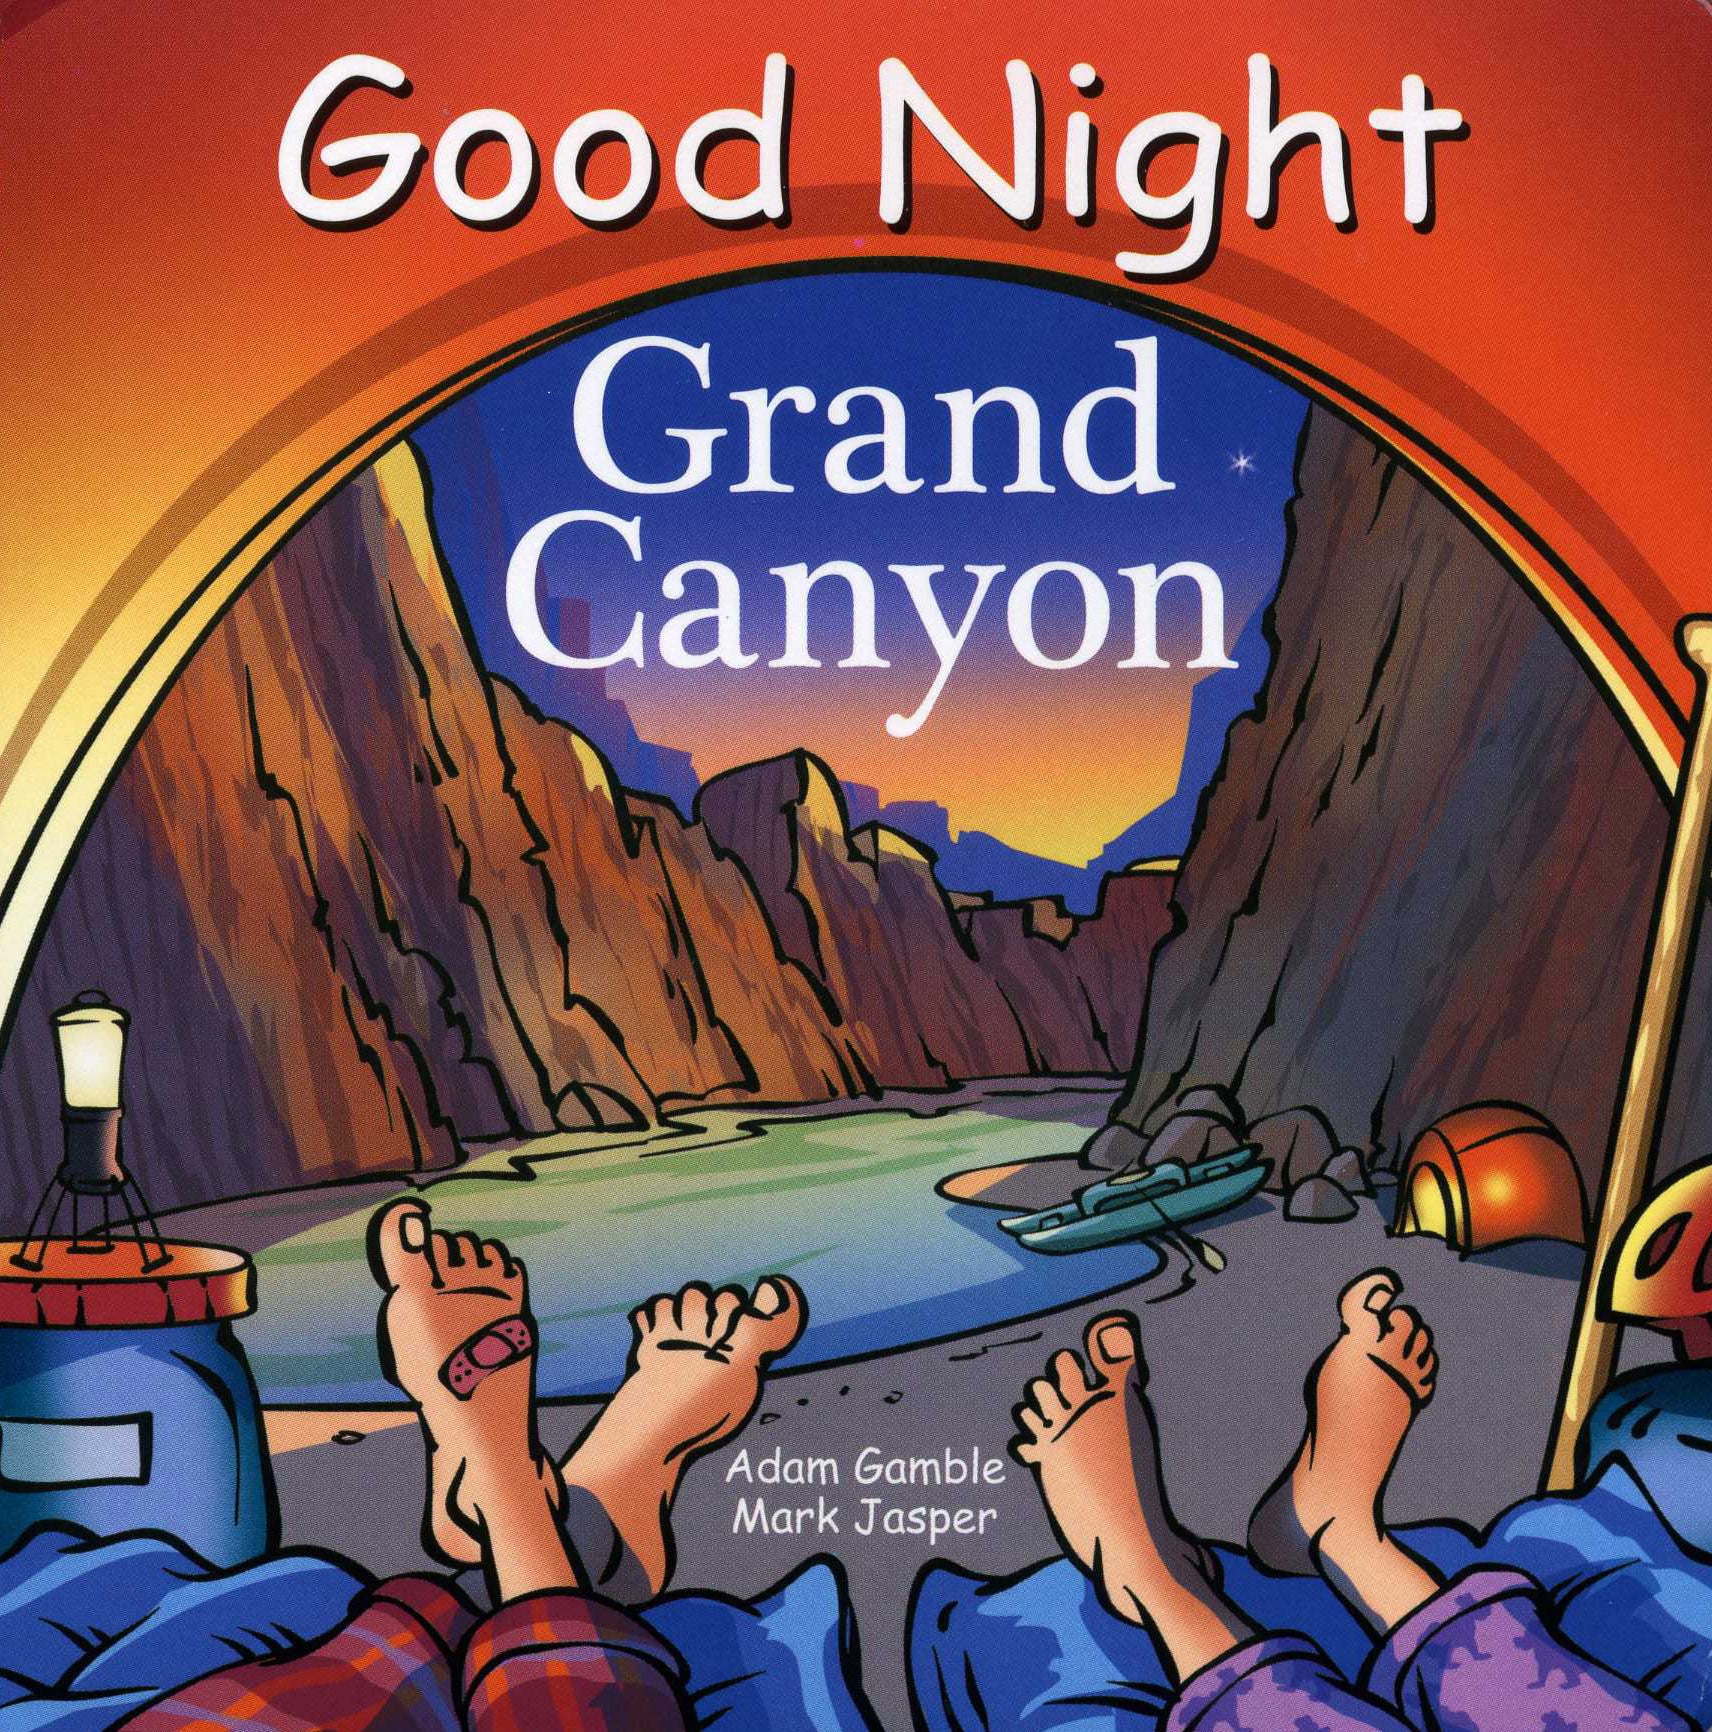 Good Night Grand Canyon